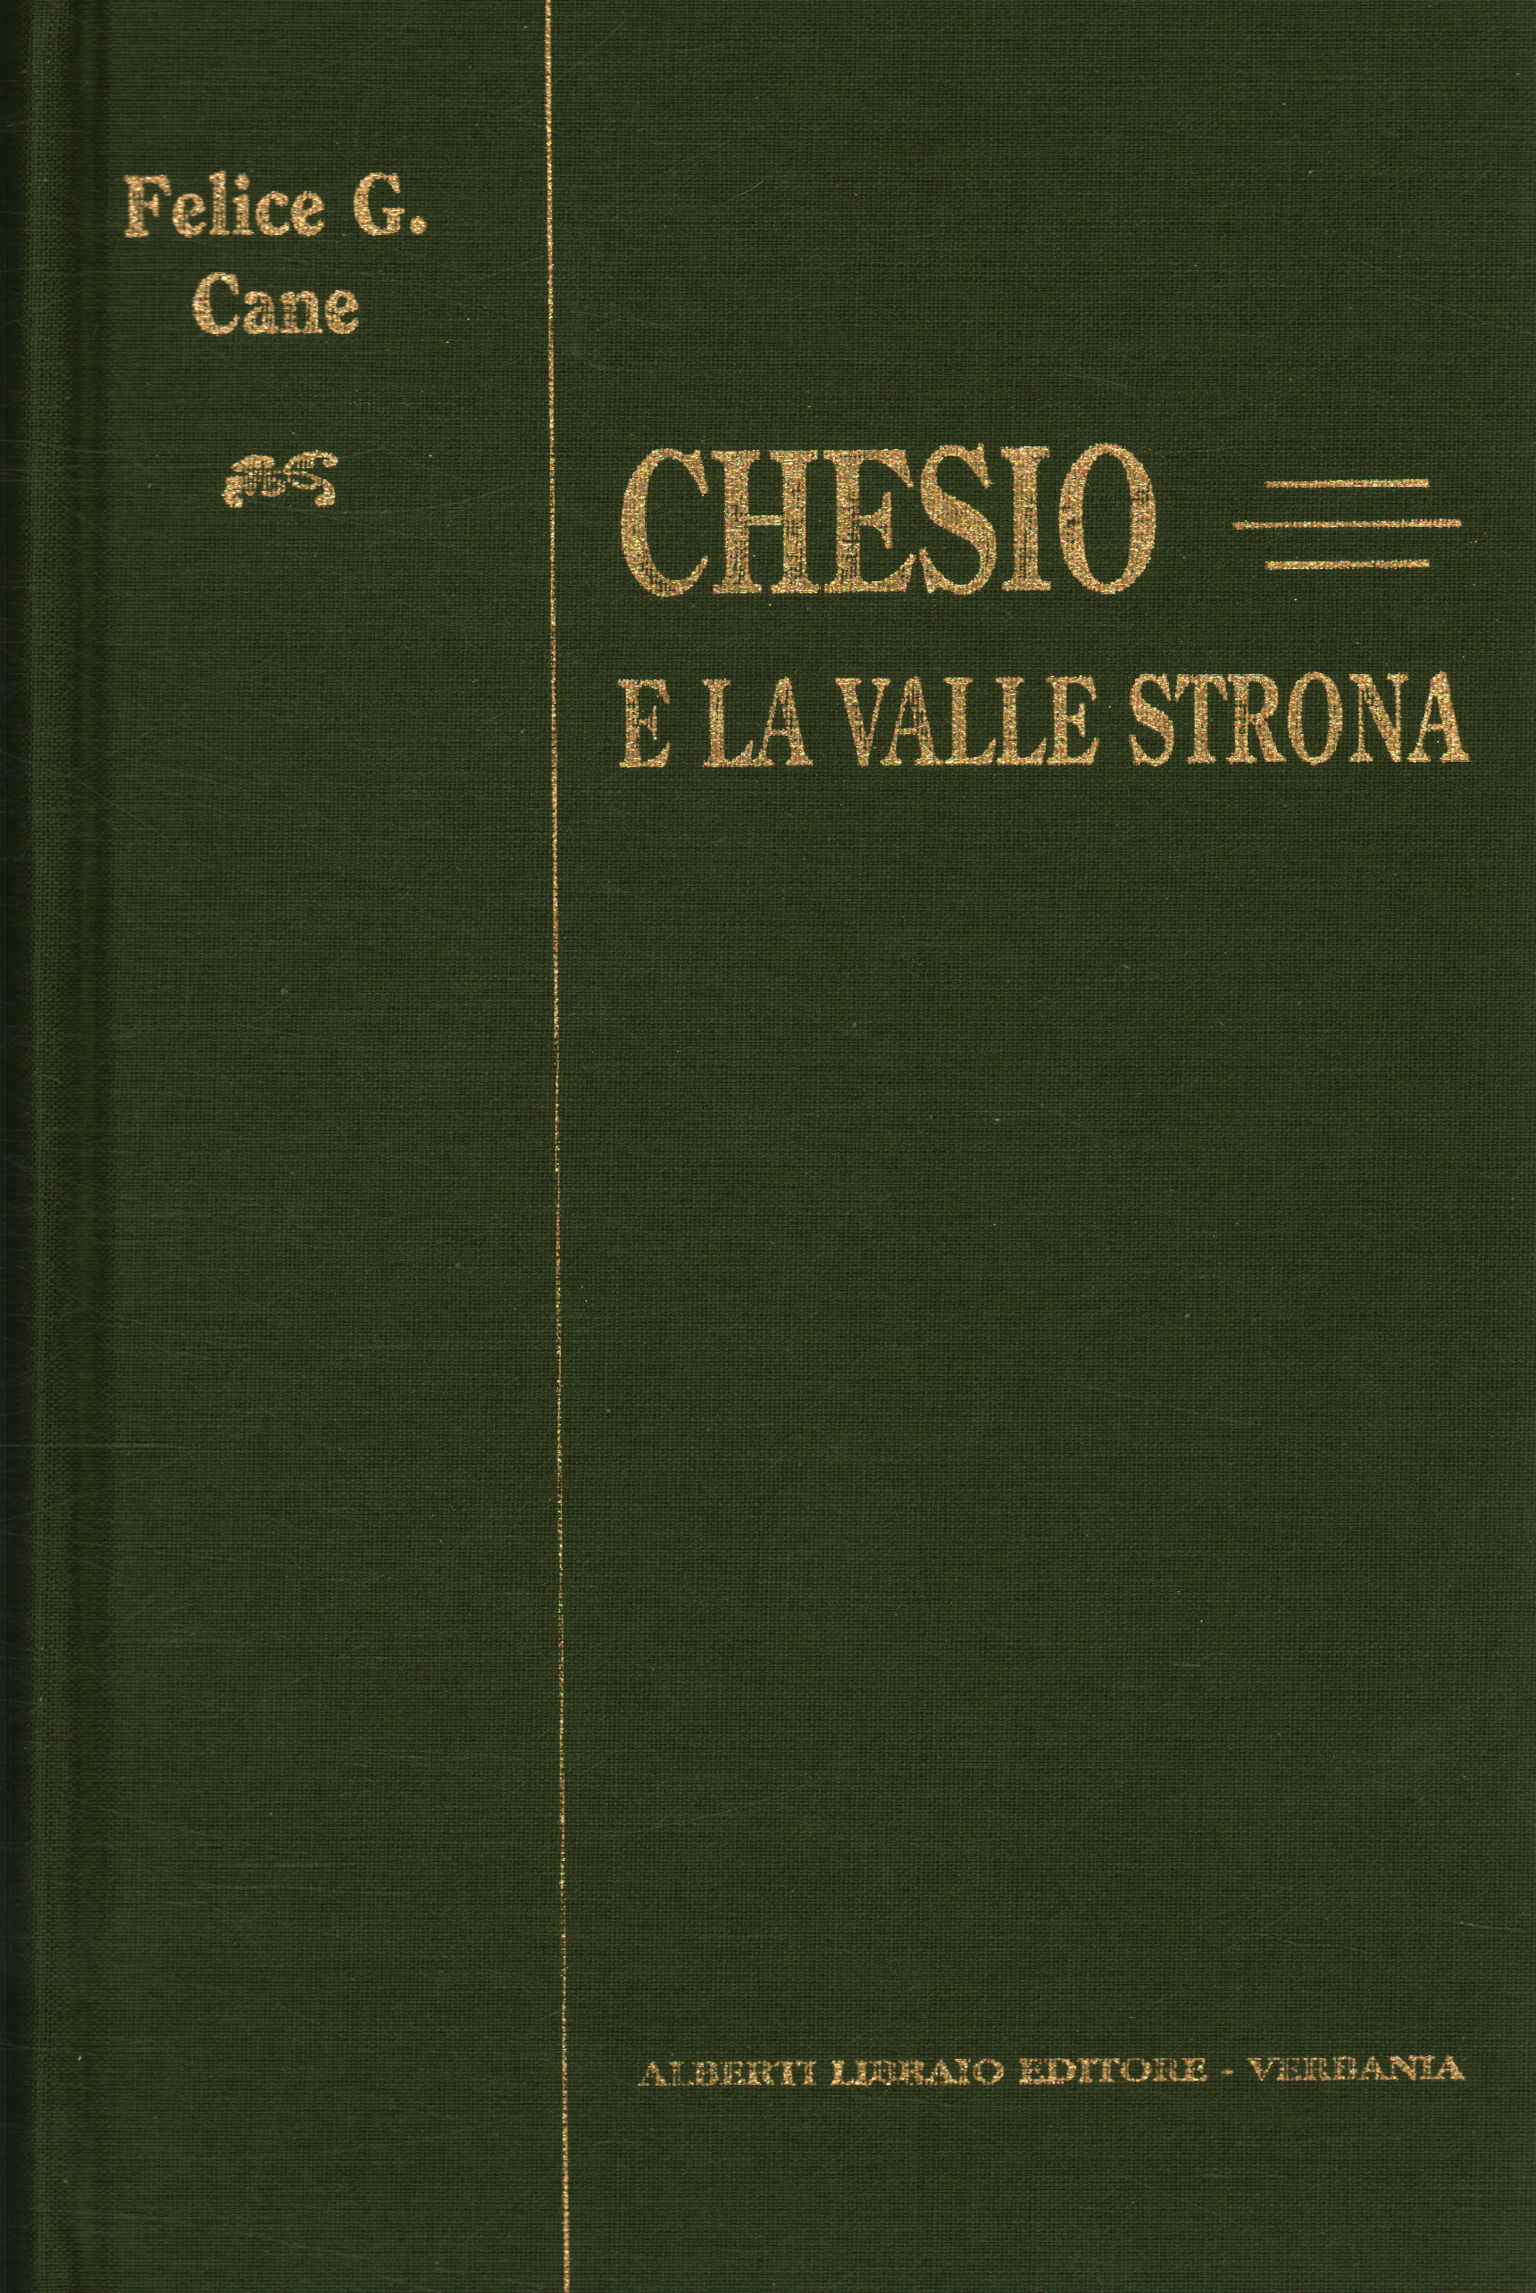 Histoire de Chesio, Histoire de Chesio et notes historiques de